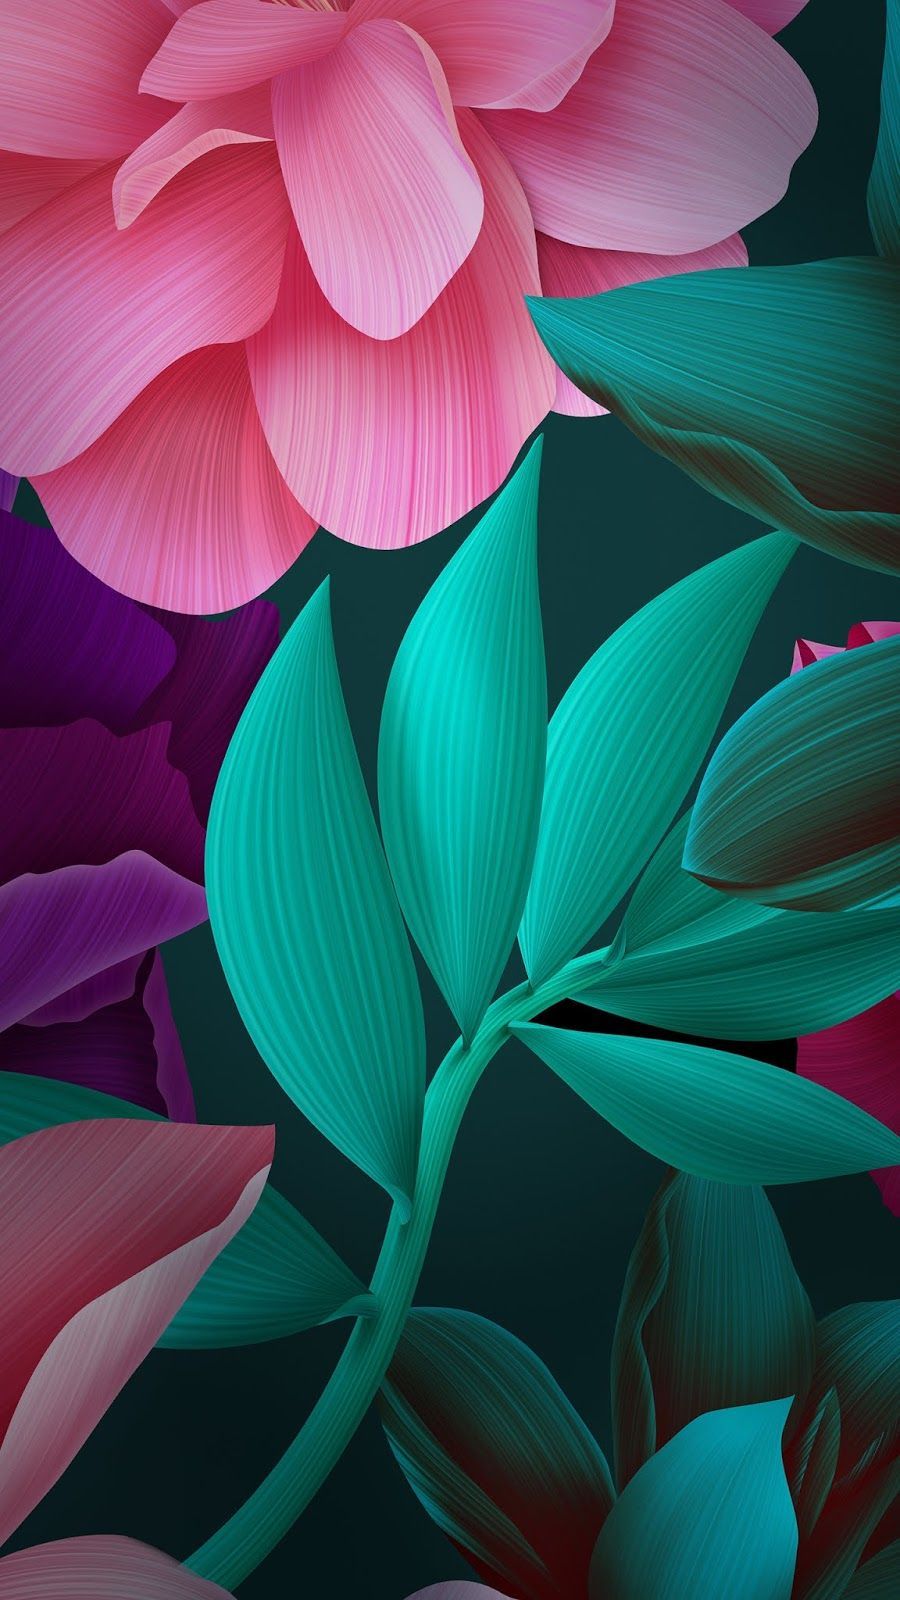 Magenta flower huawei blue 3D mobile wallpaper. Huawei wallpaper, Mobile wallpaper, HD flower wallpaper